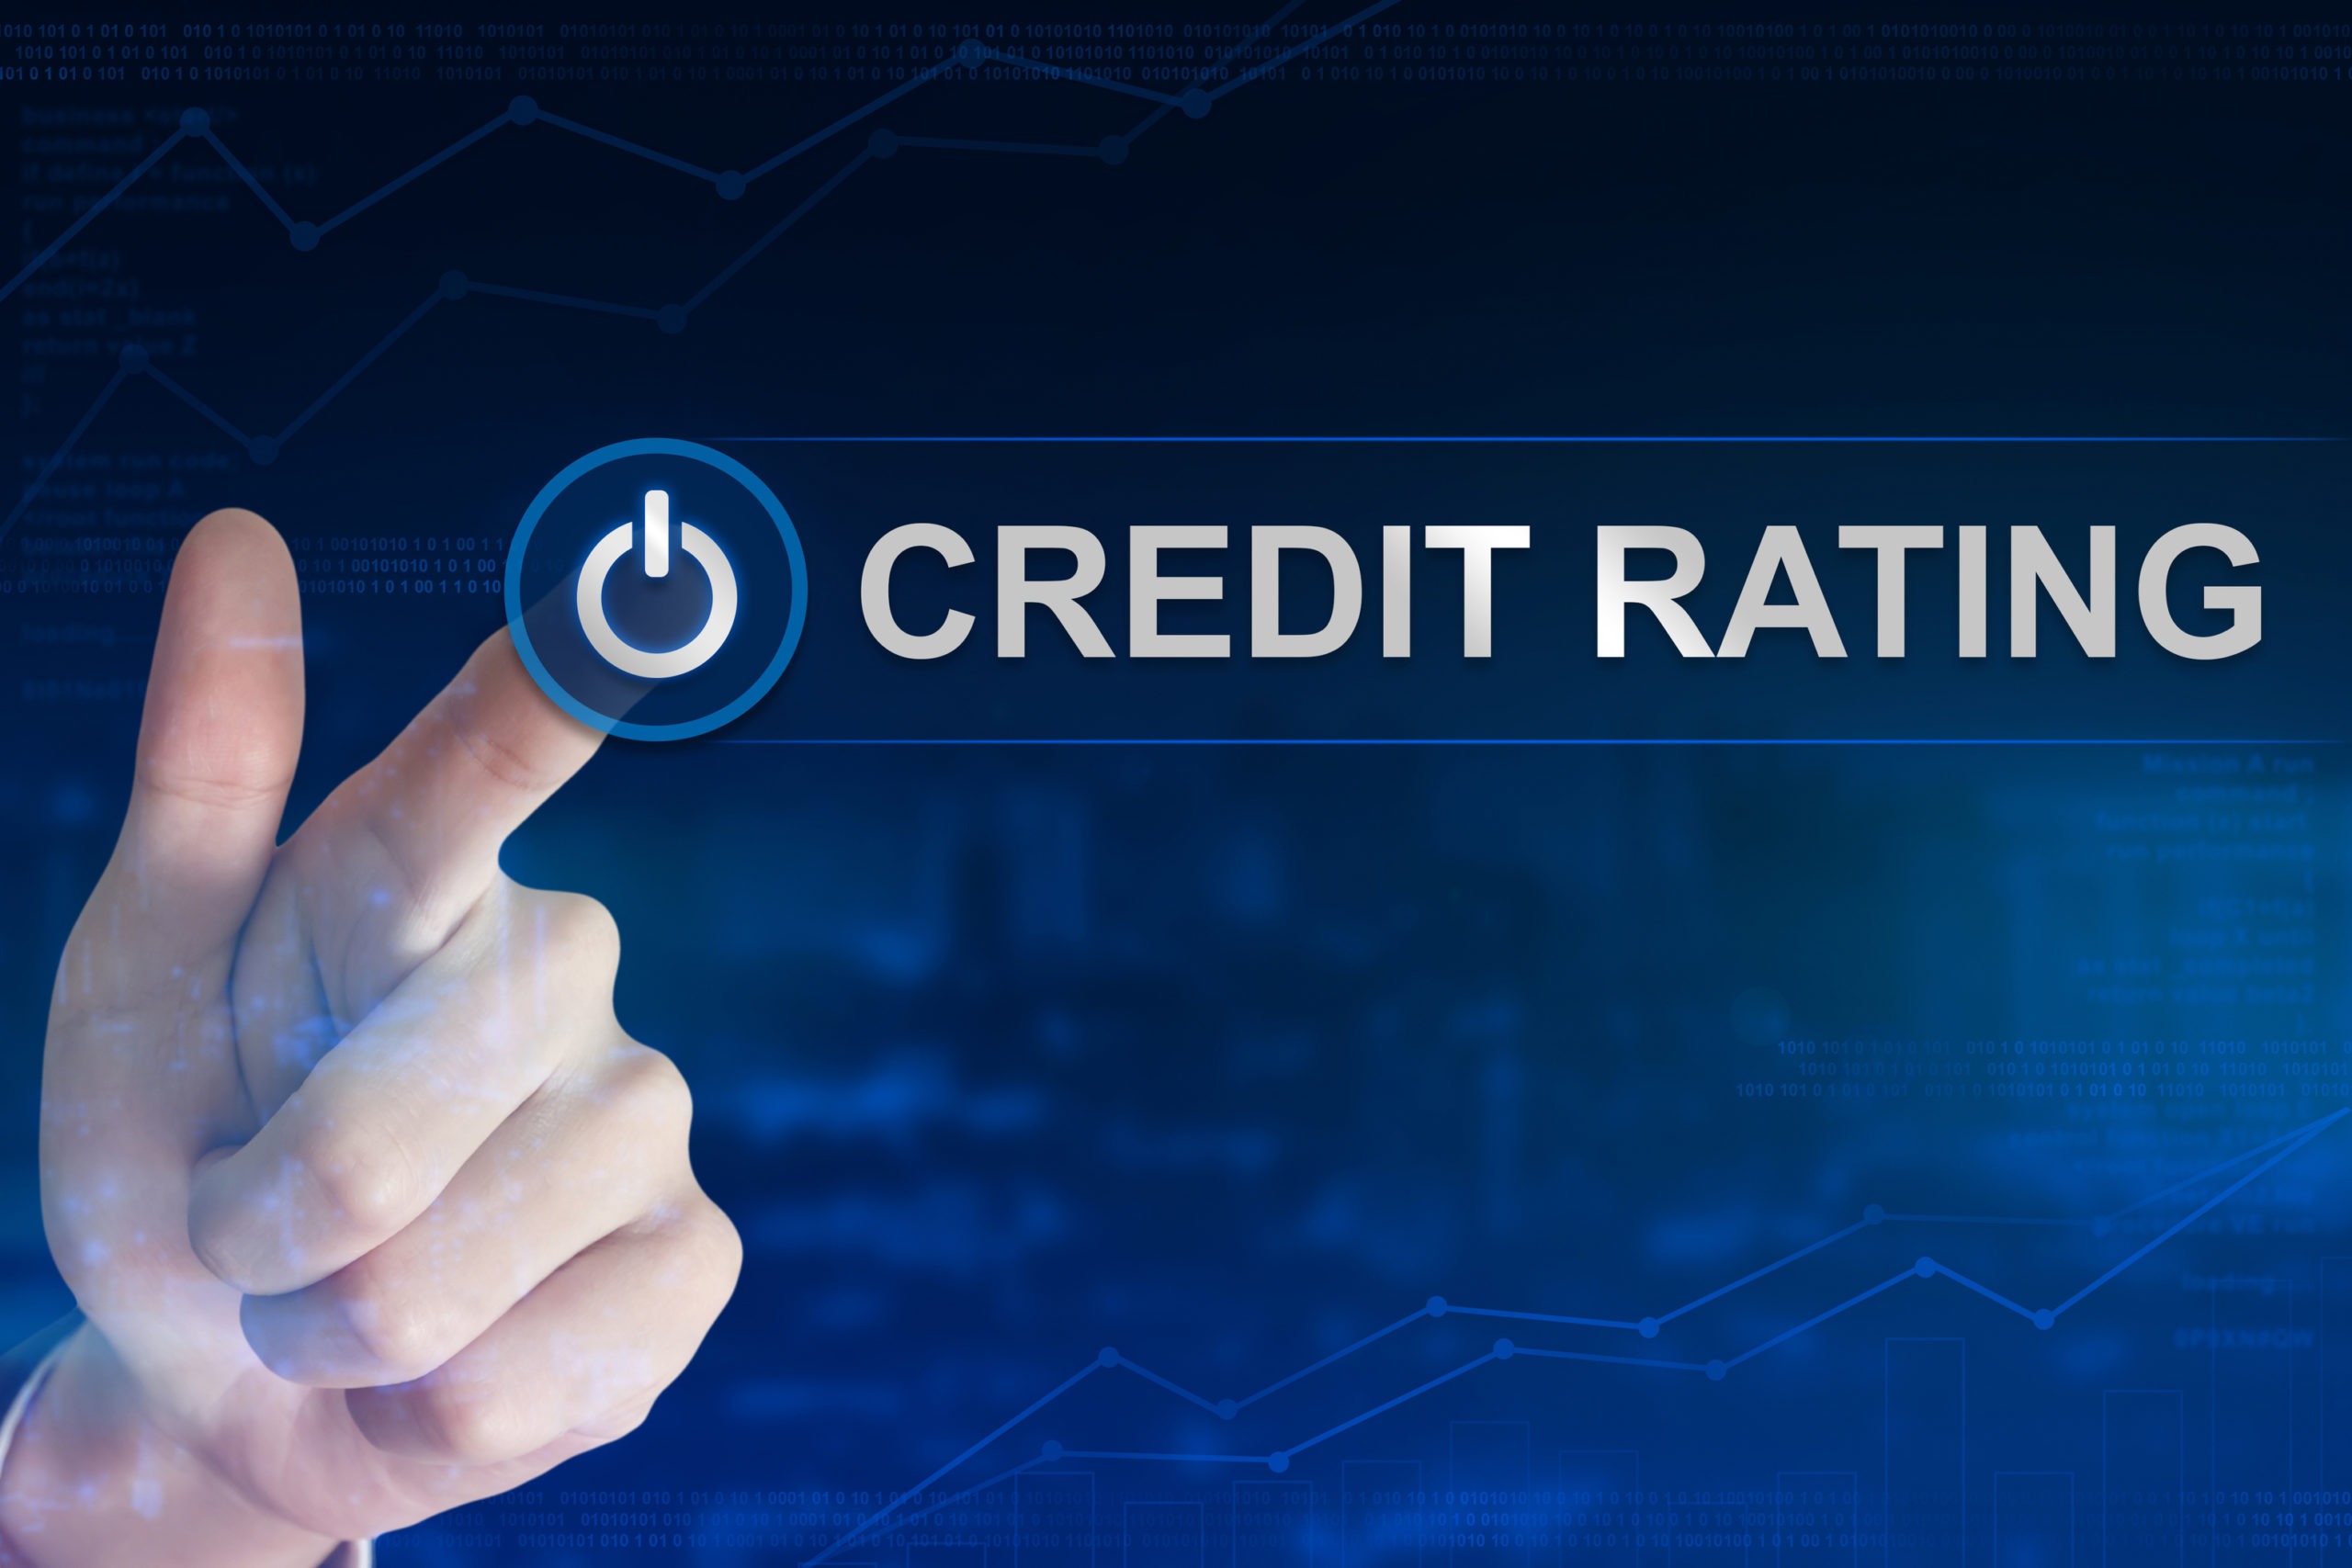 How Is Having No Credit History The Same As Having Bad Credit?